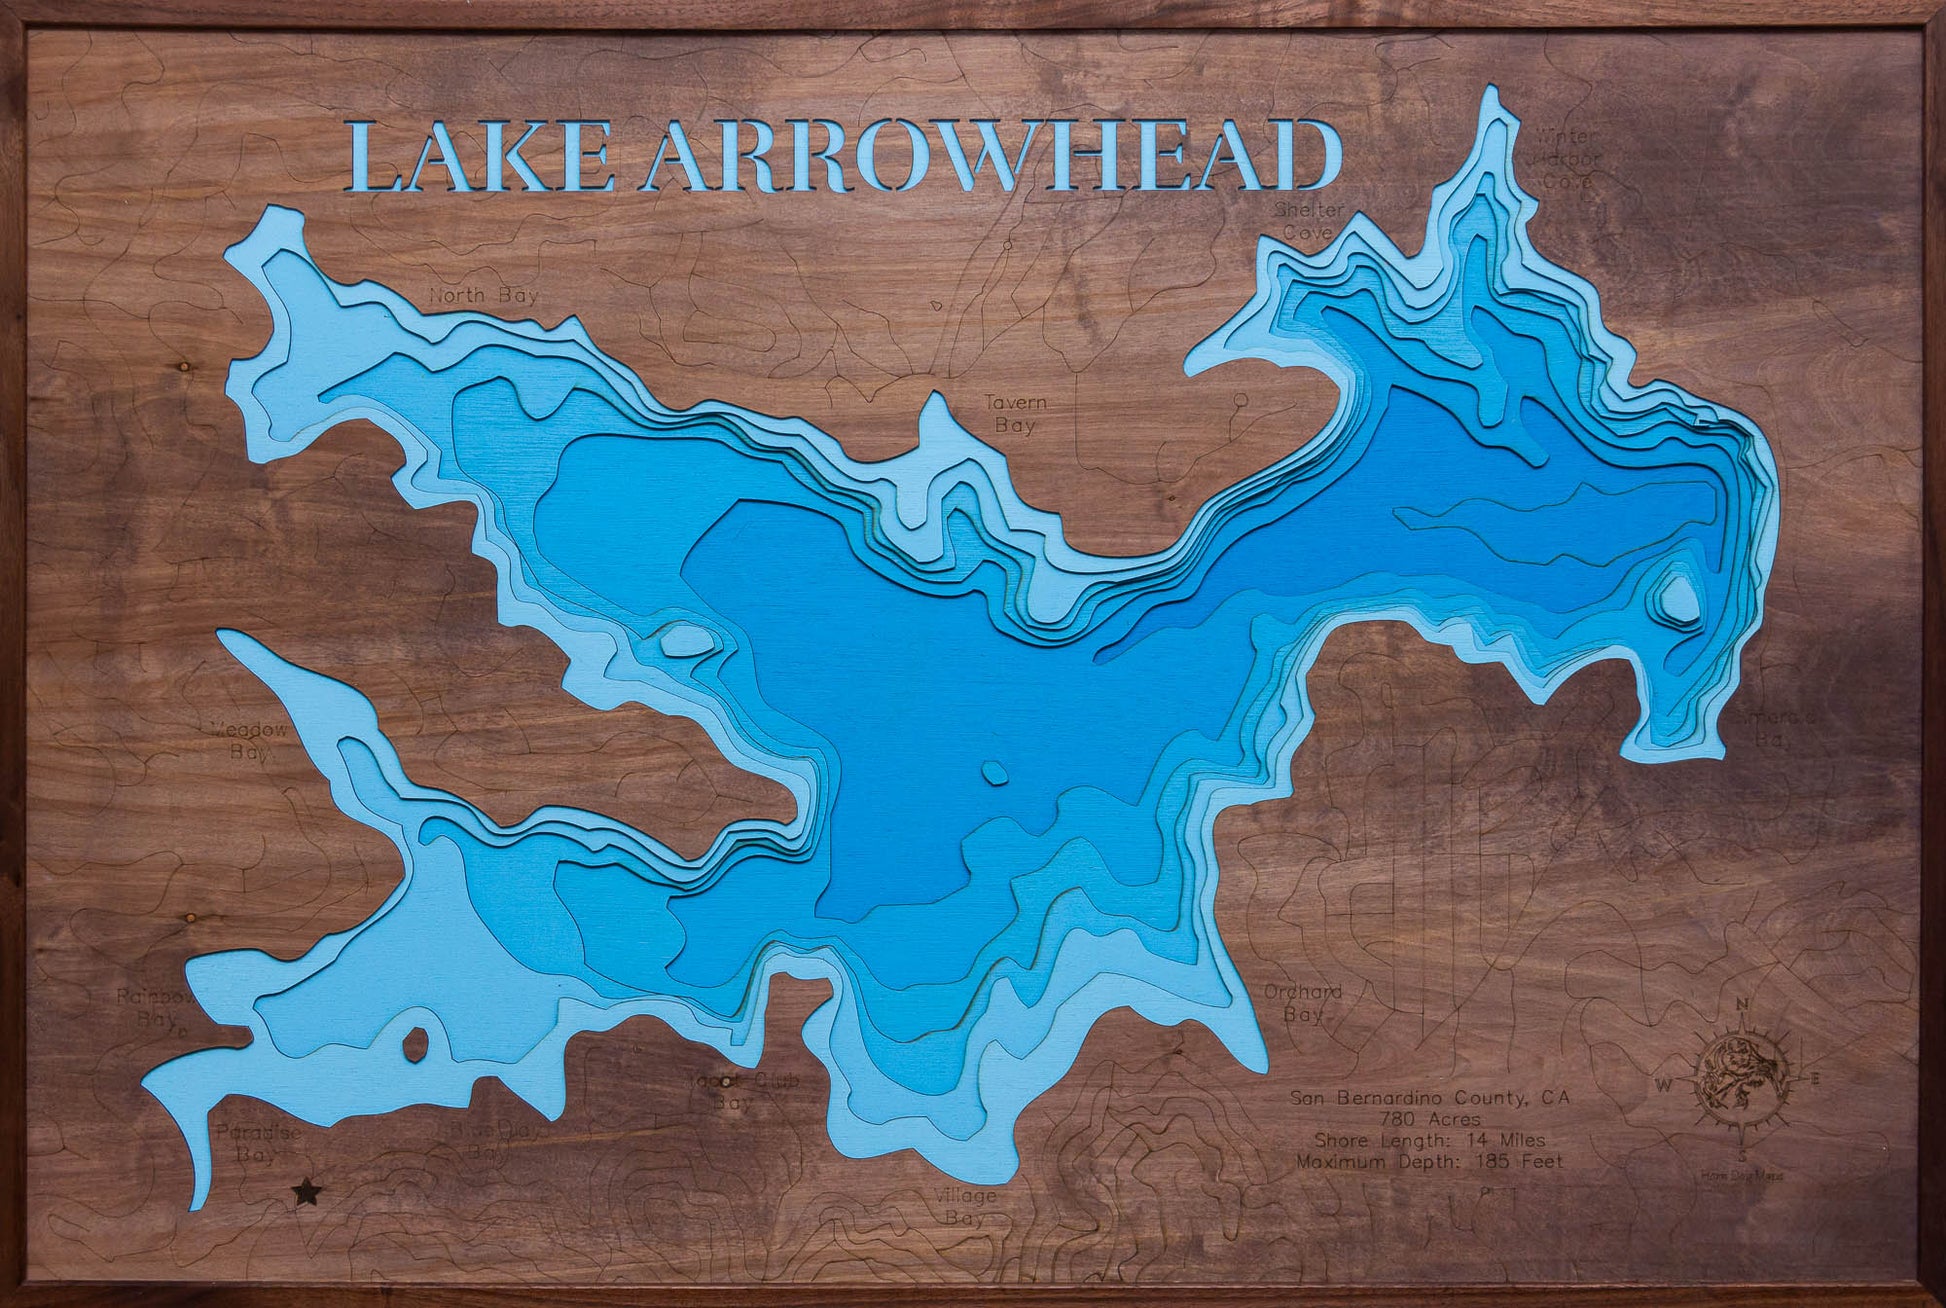 Lake Arrowhead in San Bernardino County, CA